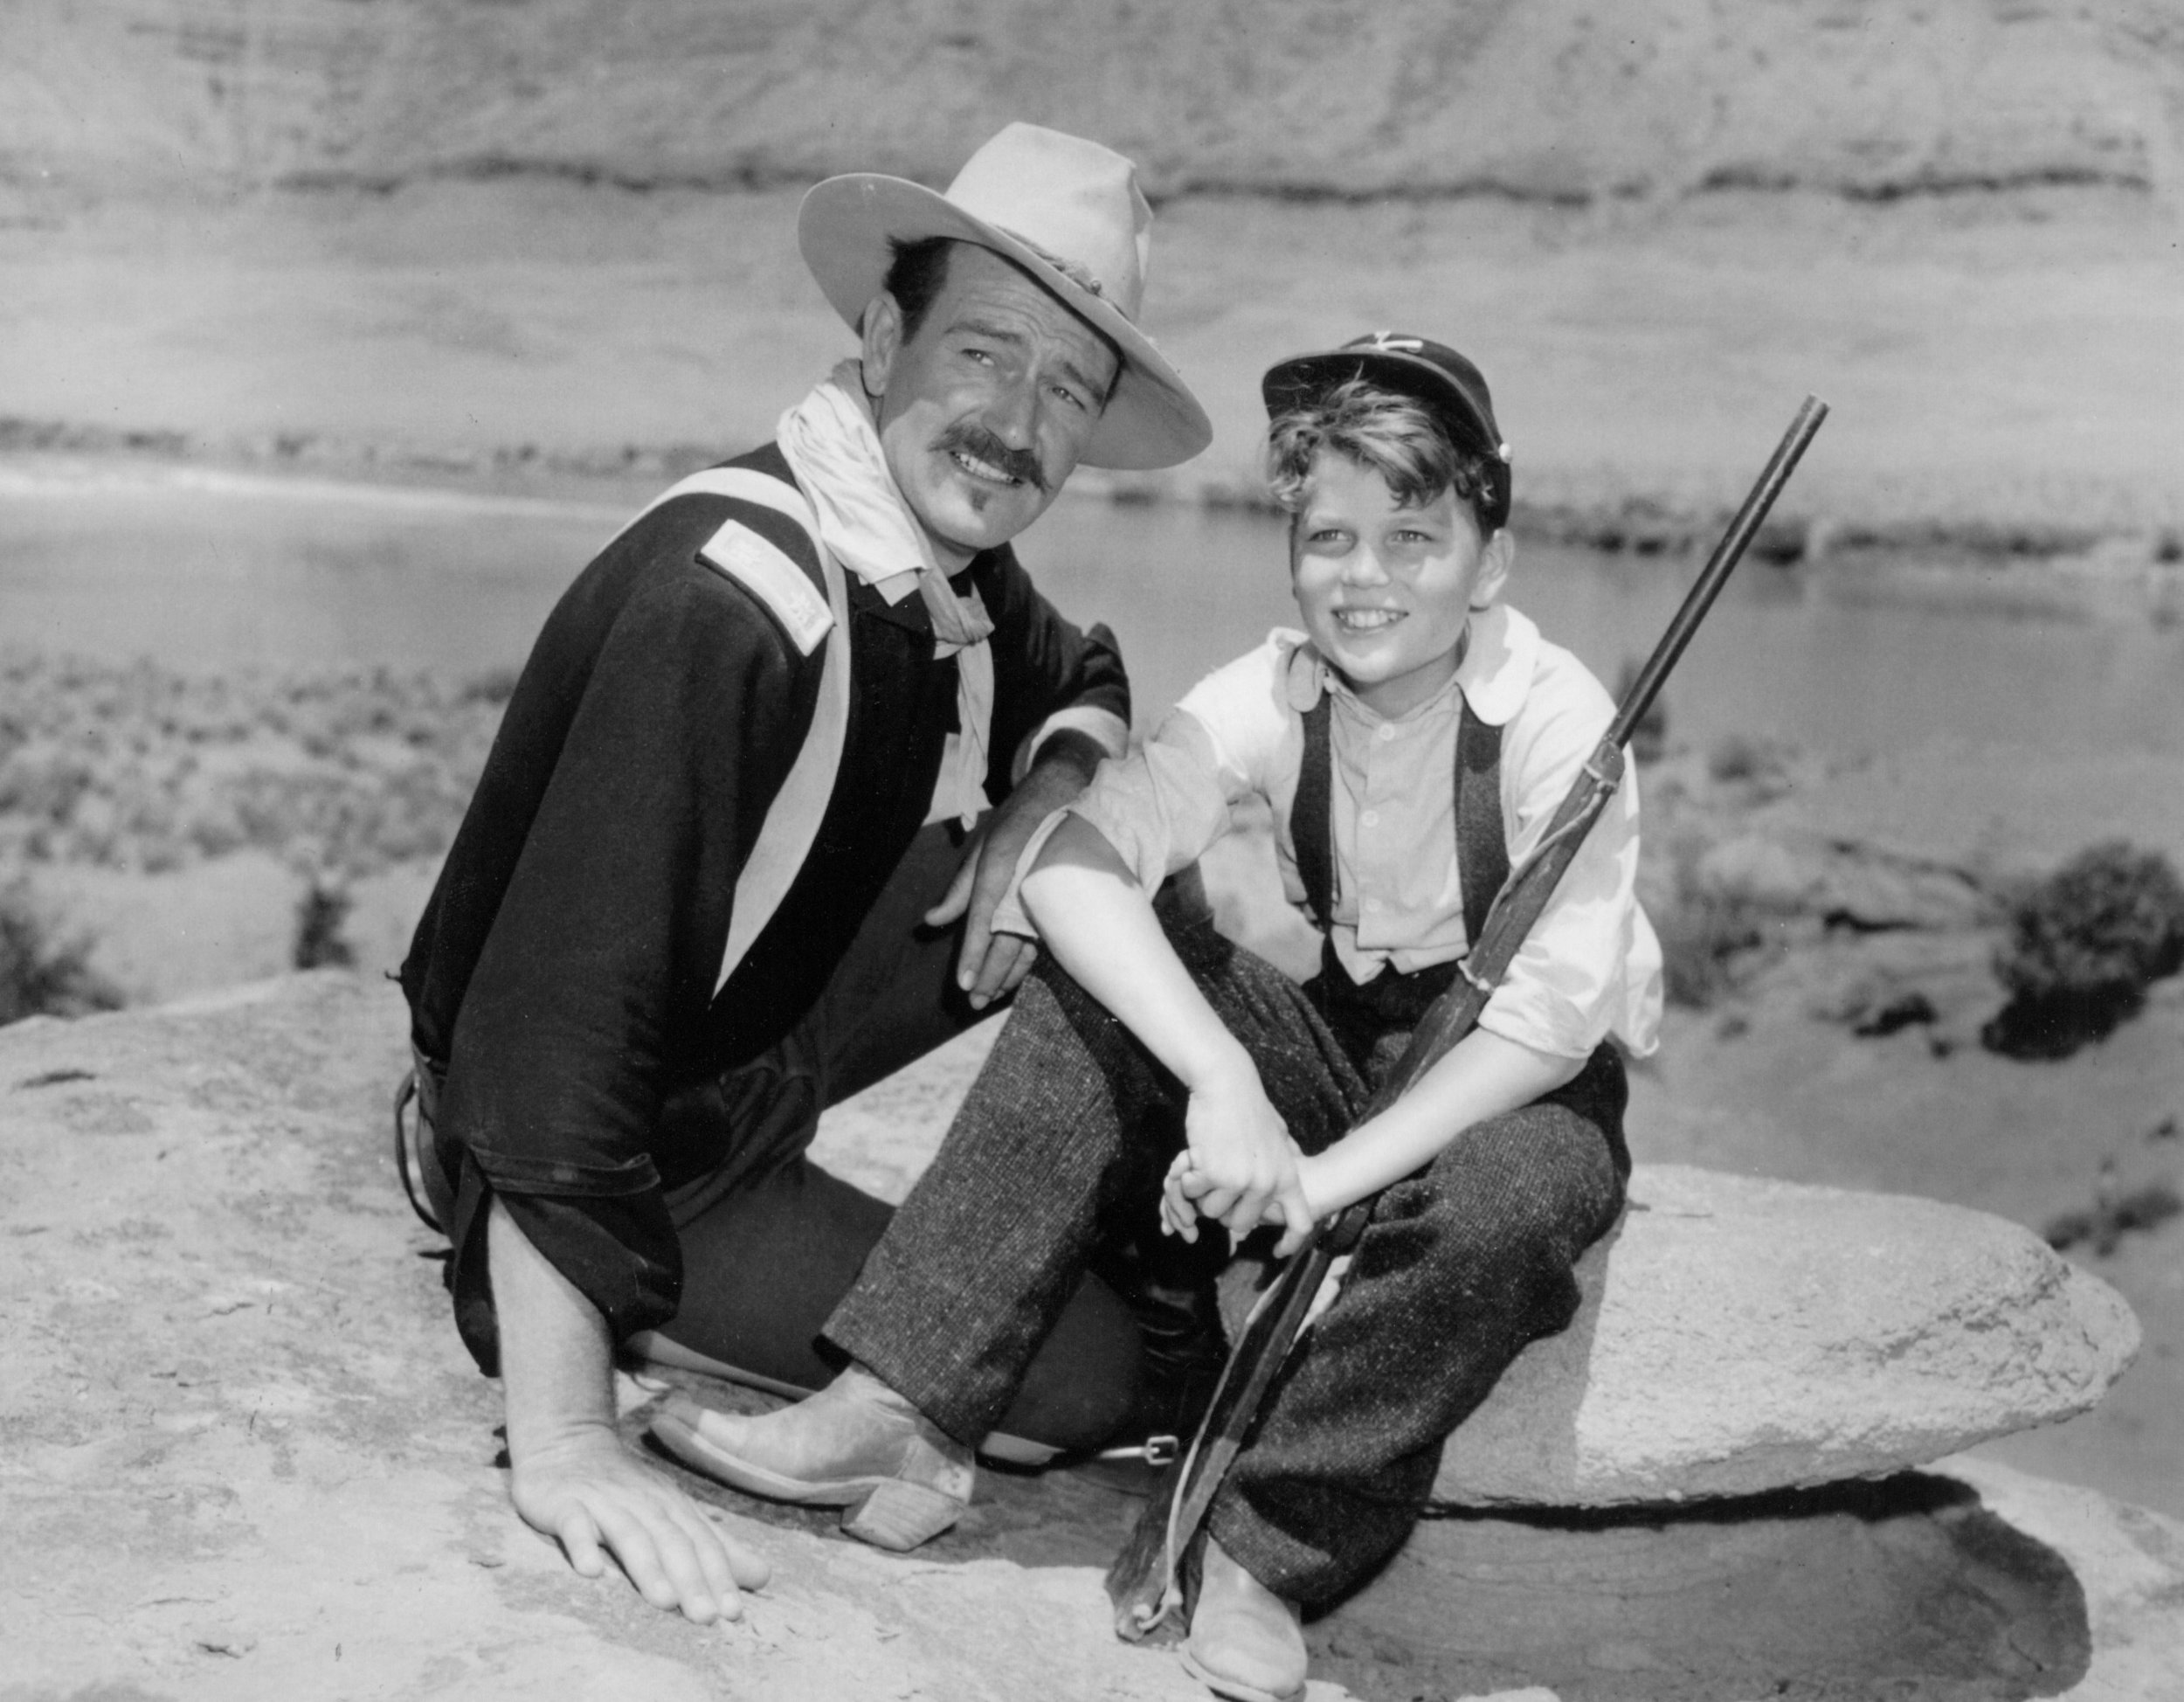 John Wayne (left) and Patrick Wayne (right) on the set of Rio Grande in 1950. Photo courtesy of John Wayne Enterprises